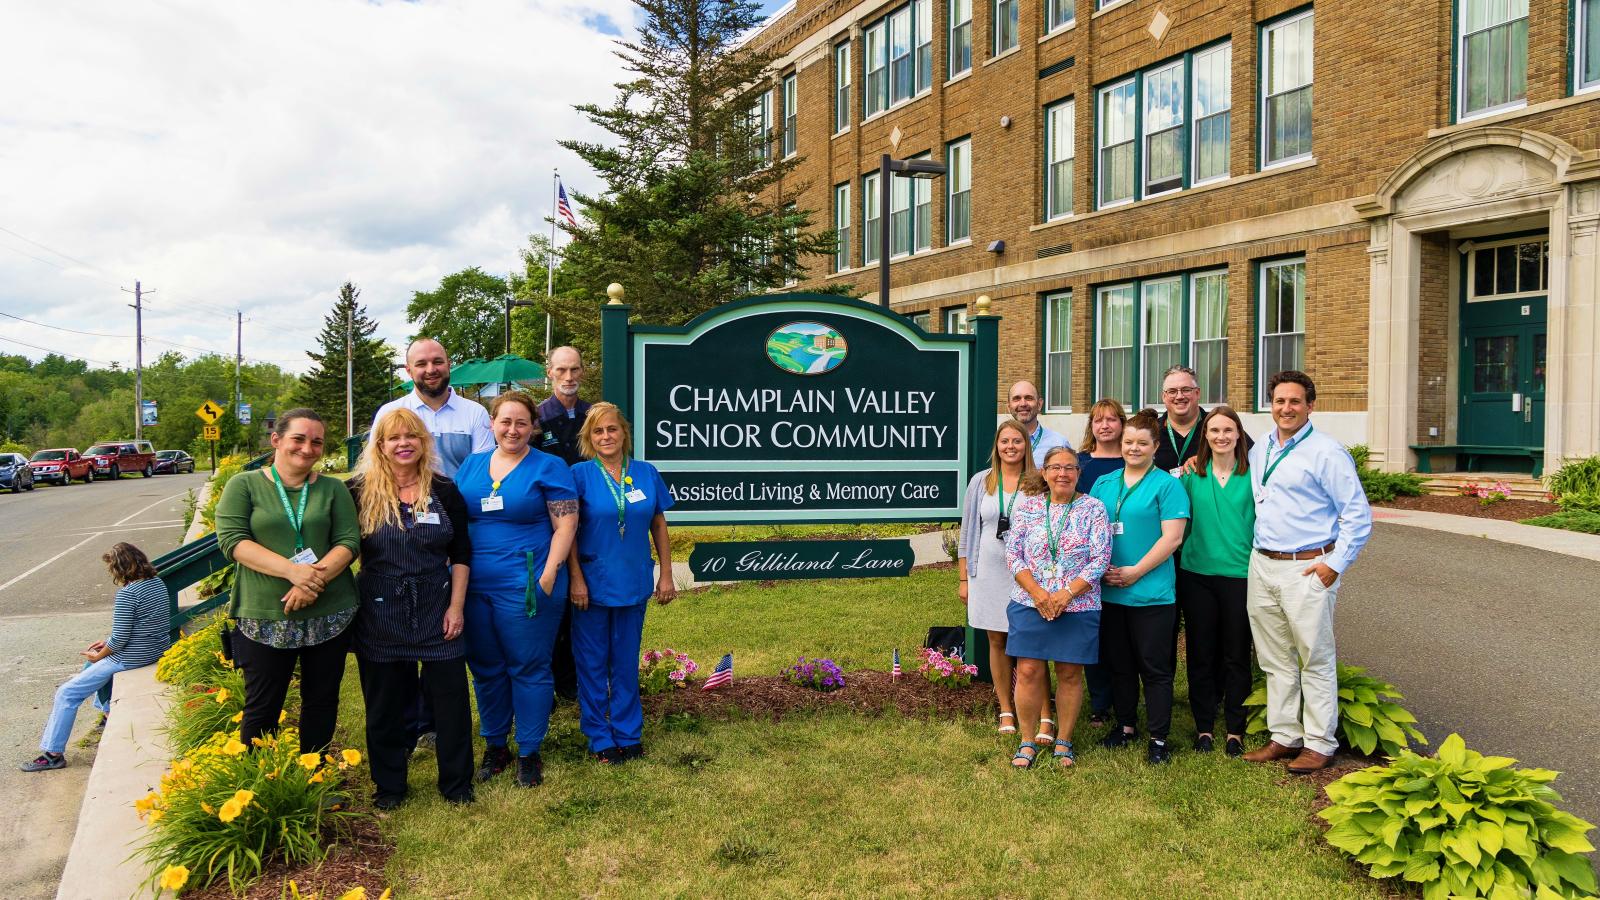 Senior living care team standing next to Champlain Valley Senior Community sign.